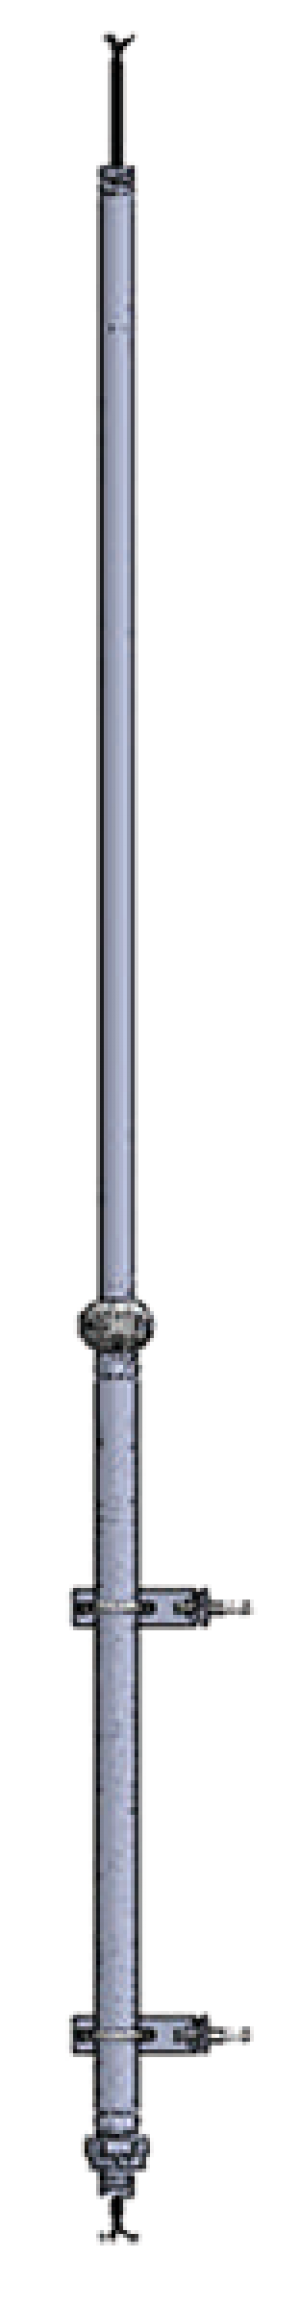 Telescopic Lighting Pole